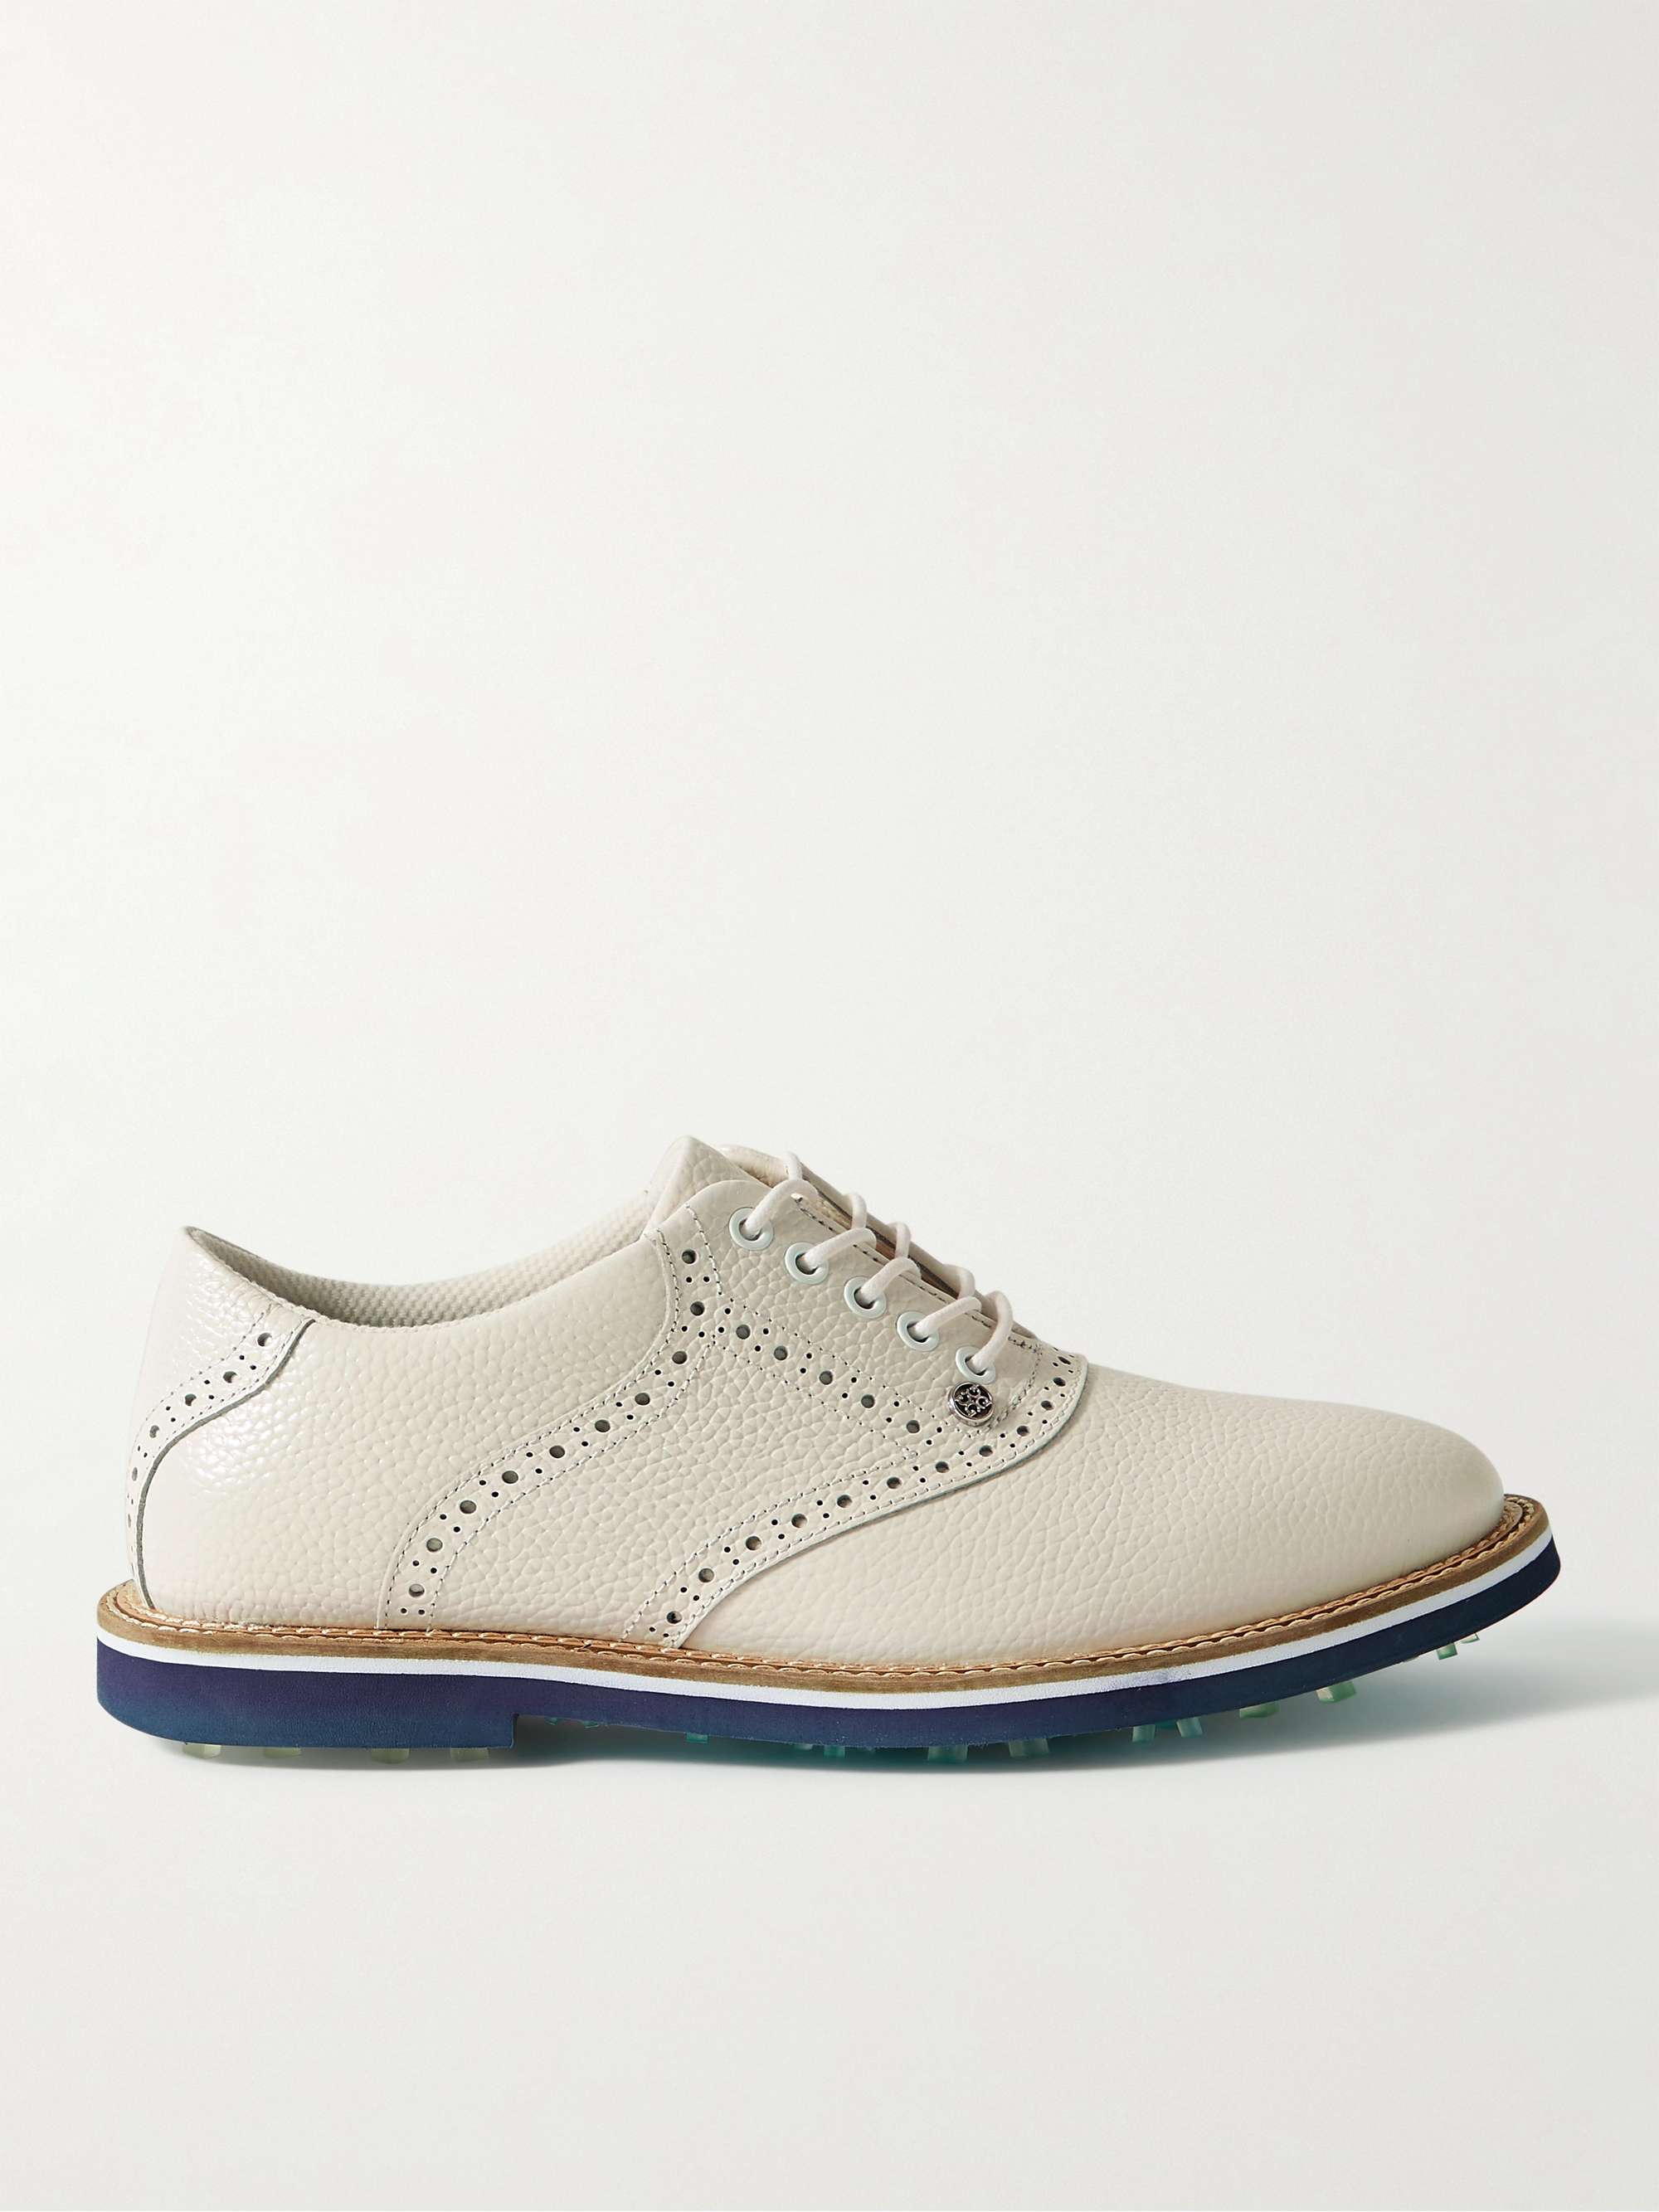 G/FORE Saddle Gallivanter Pebble-Grain Leather Golf Shoes for Men | MR  PORTER